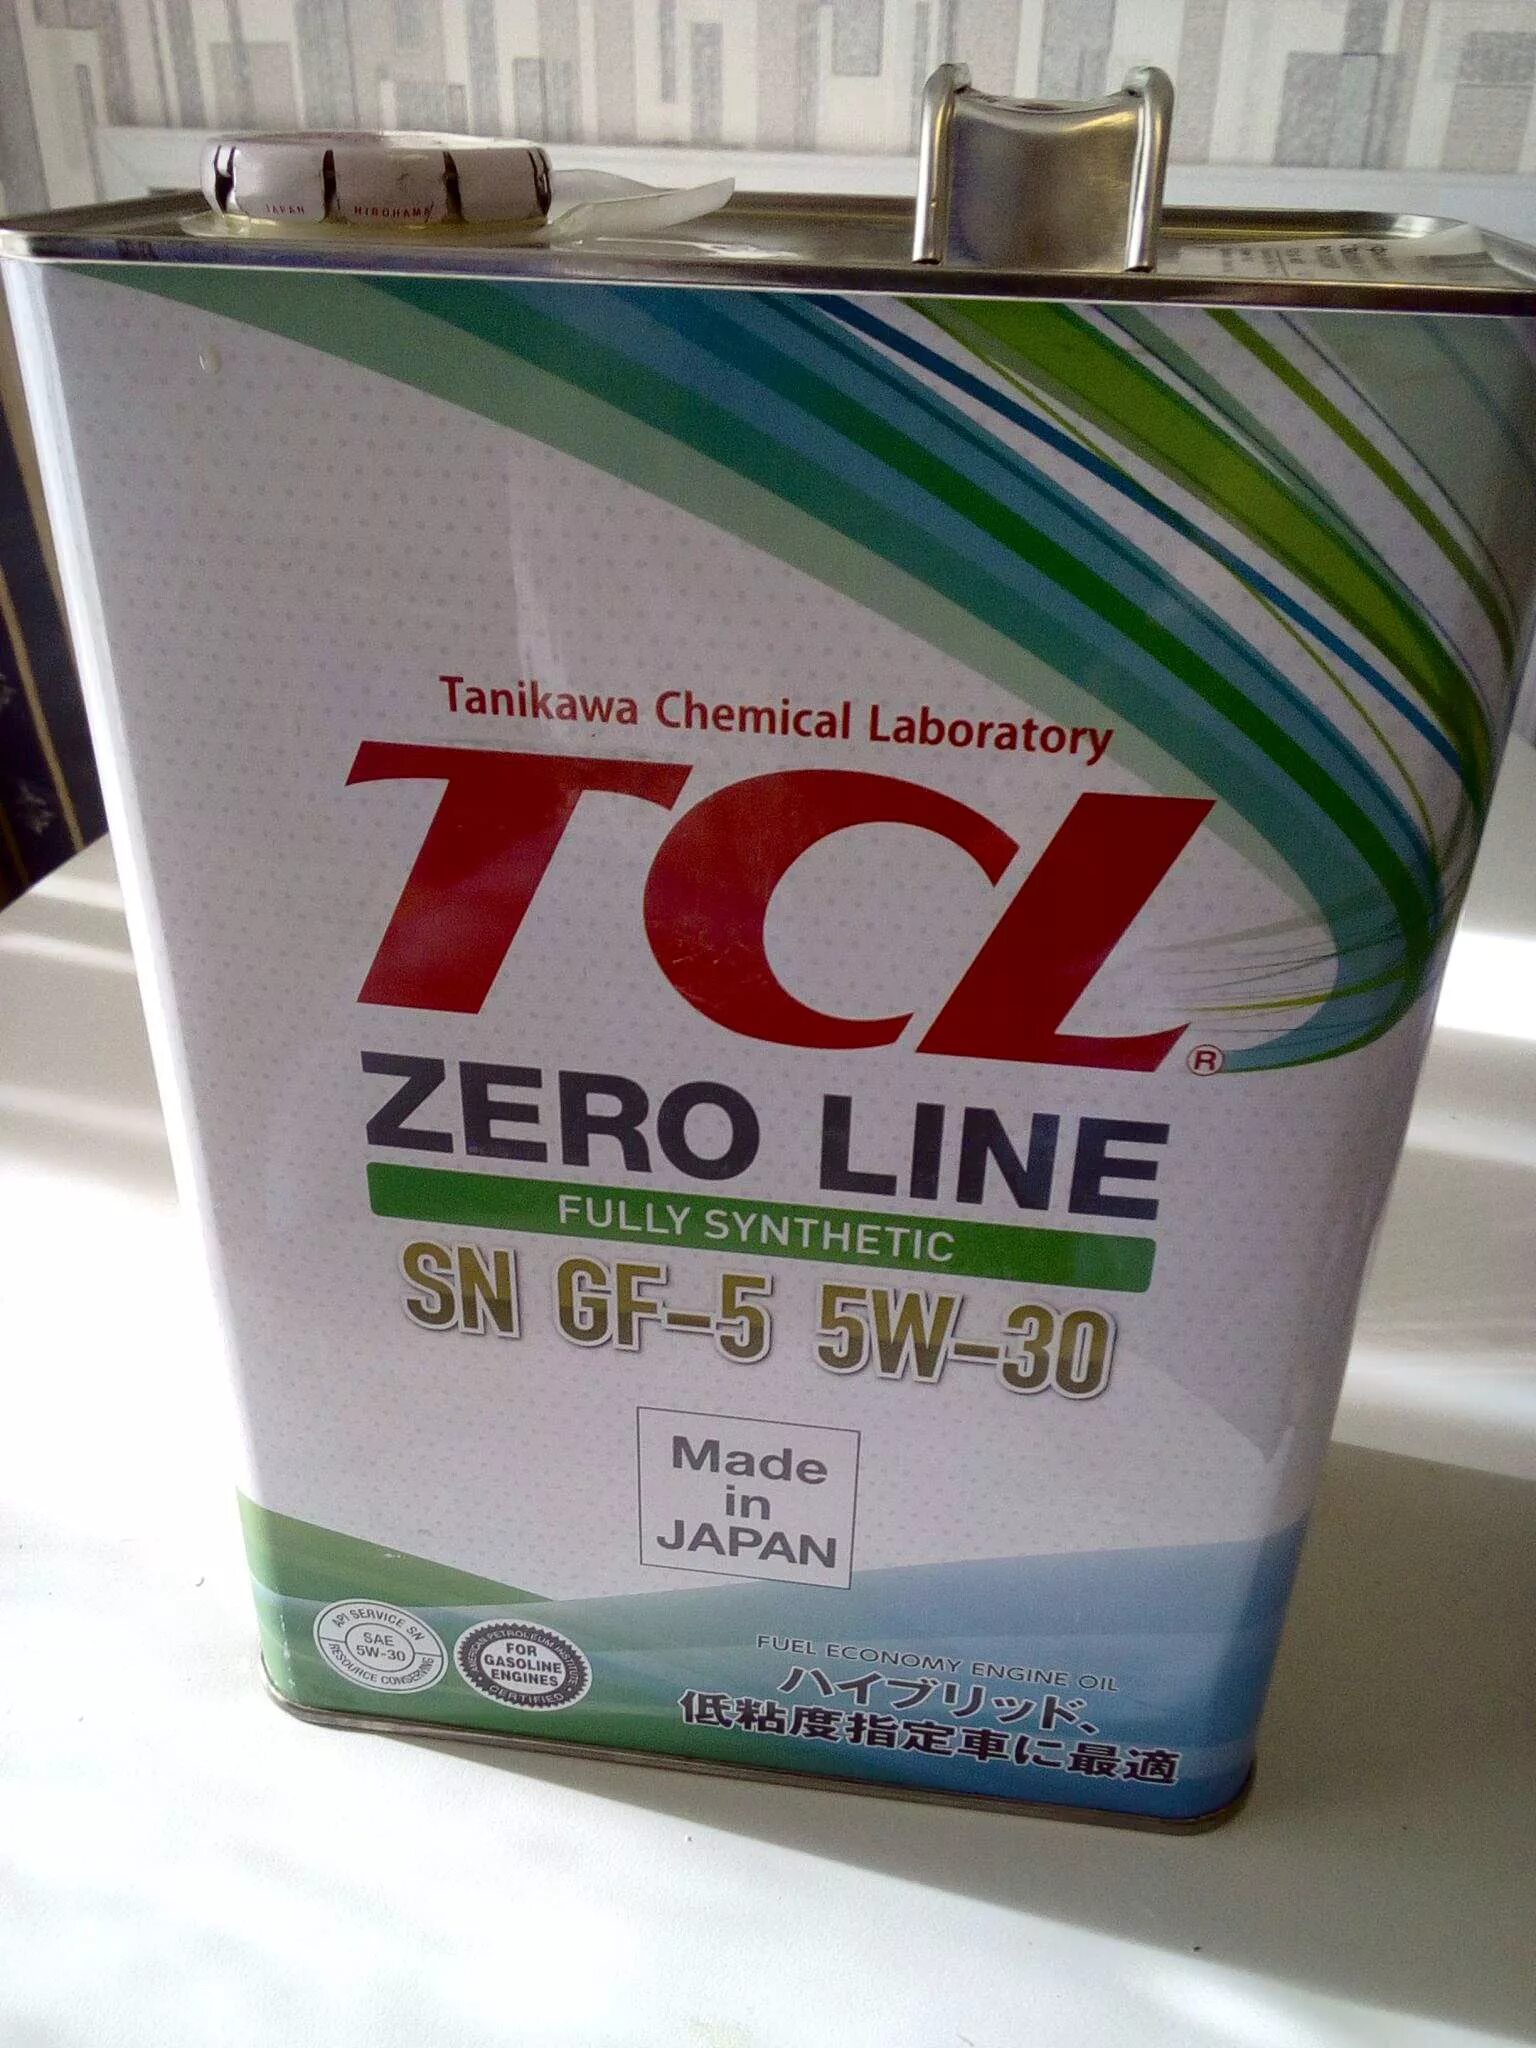 Моторное масло tcl 5w30. TCL Zero line 5w30. Масло TCL Zero line 5w-30. TCL SN gf-5 5w-30. TCL 5w-30 gf-5.